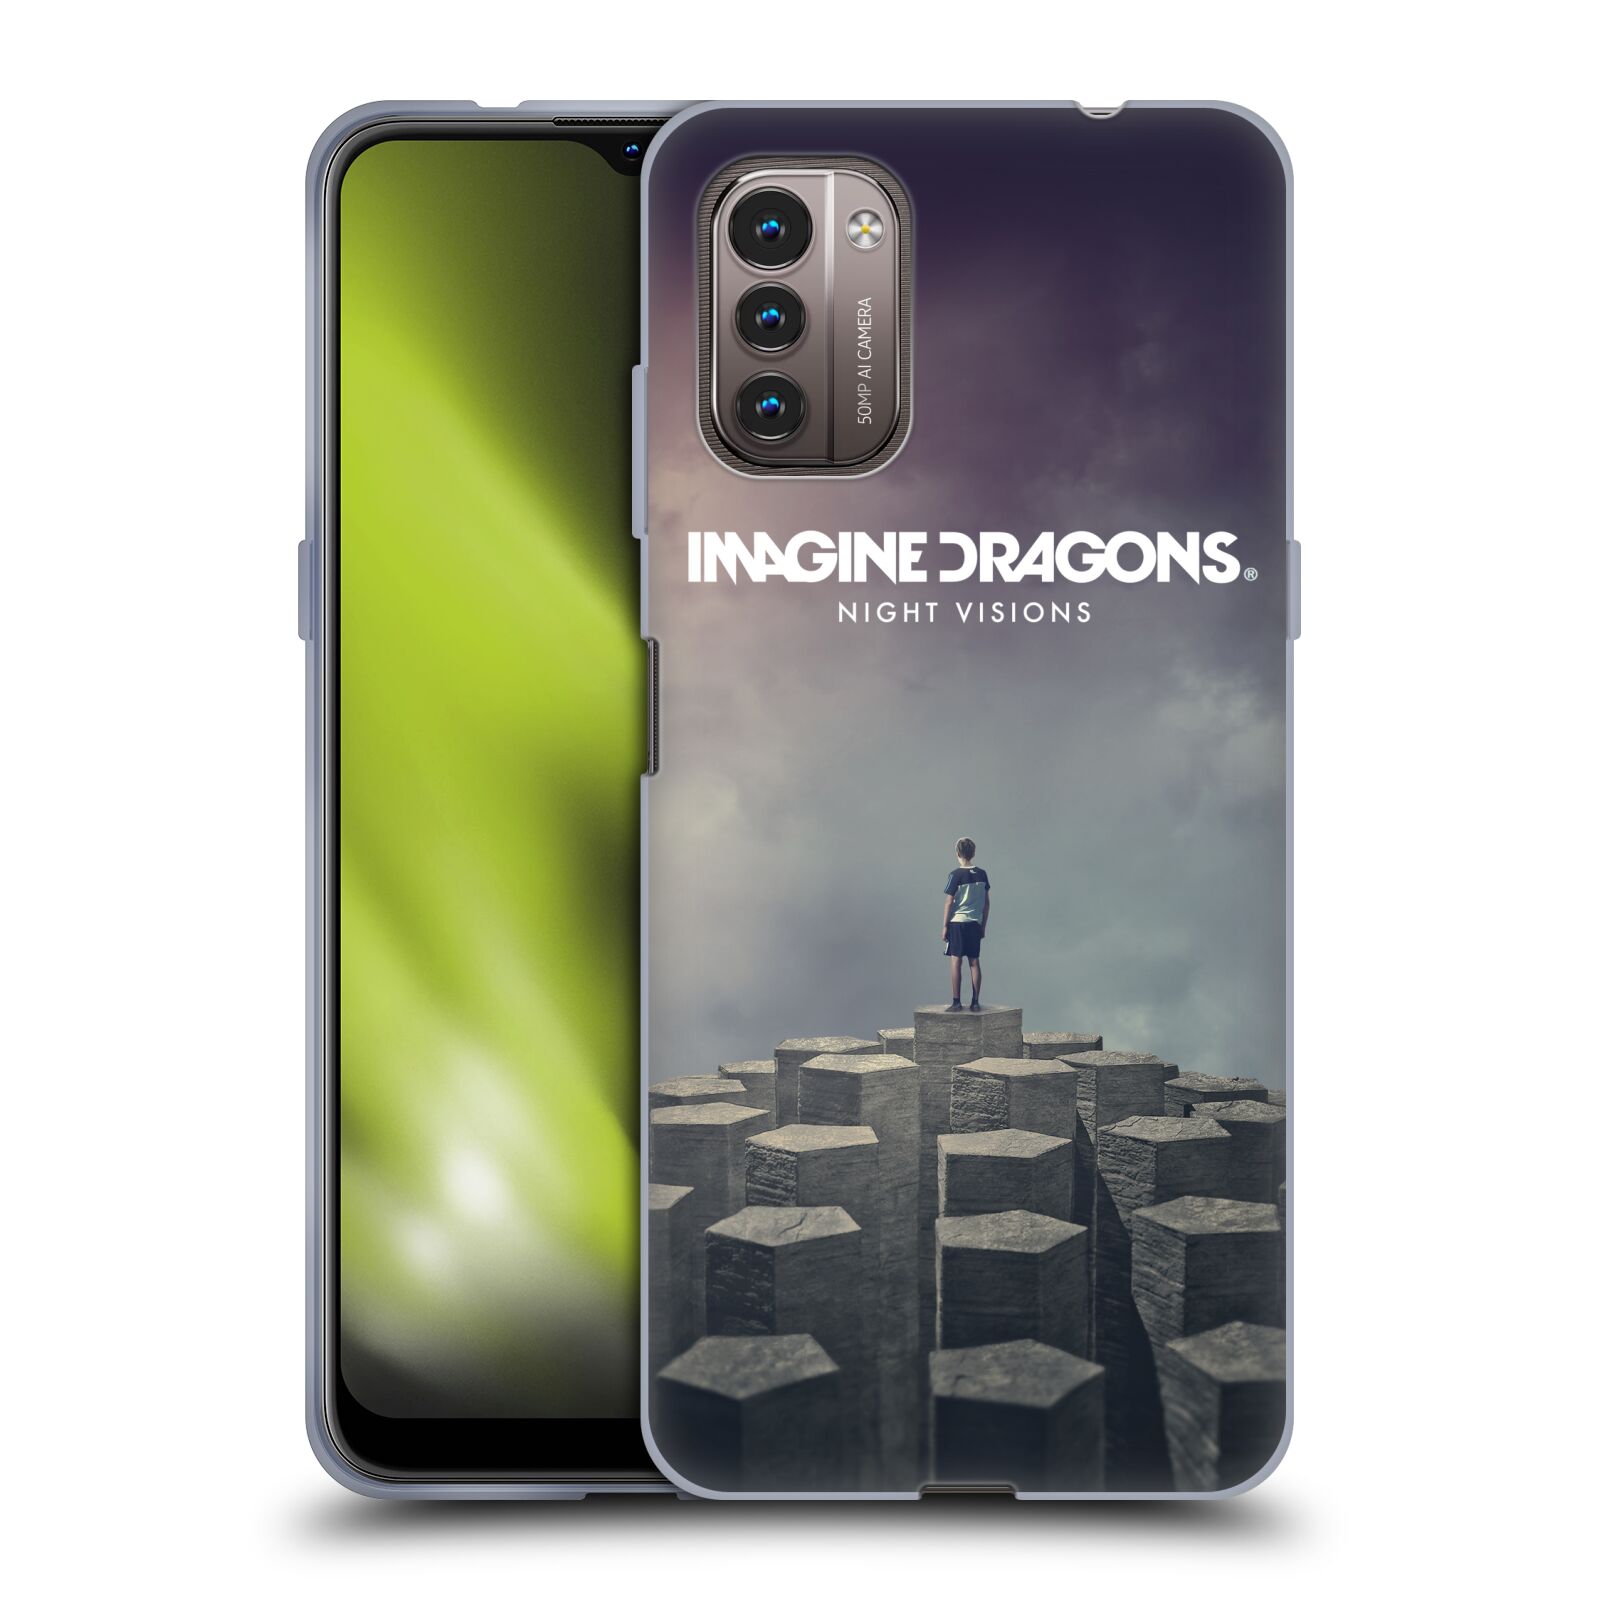 Silikonové pouzdro na mobil Nokia G11 / G21 - Imagine Dragons - Night Visions